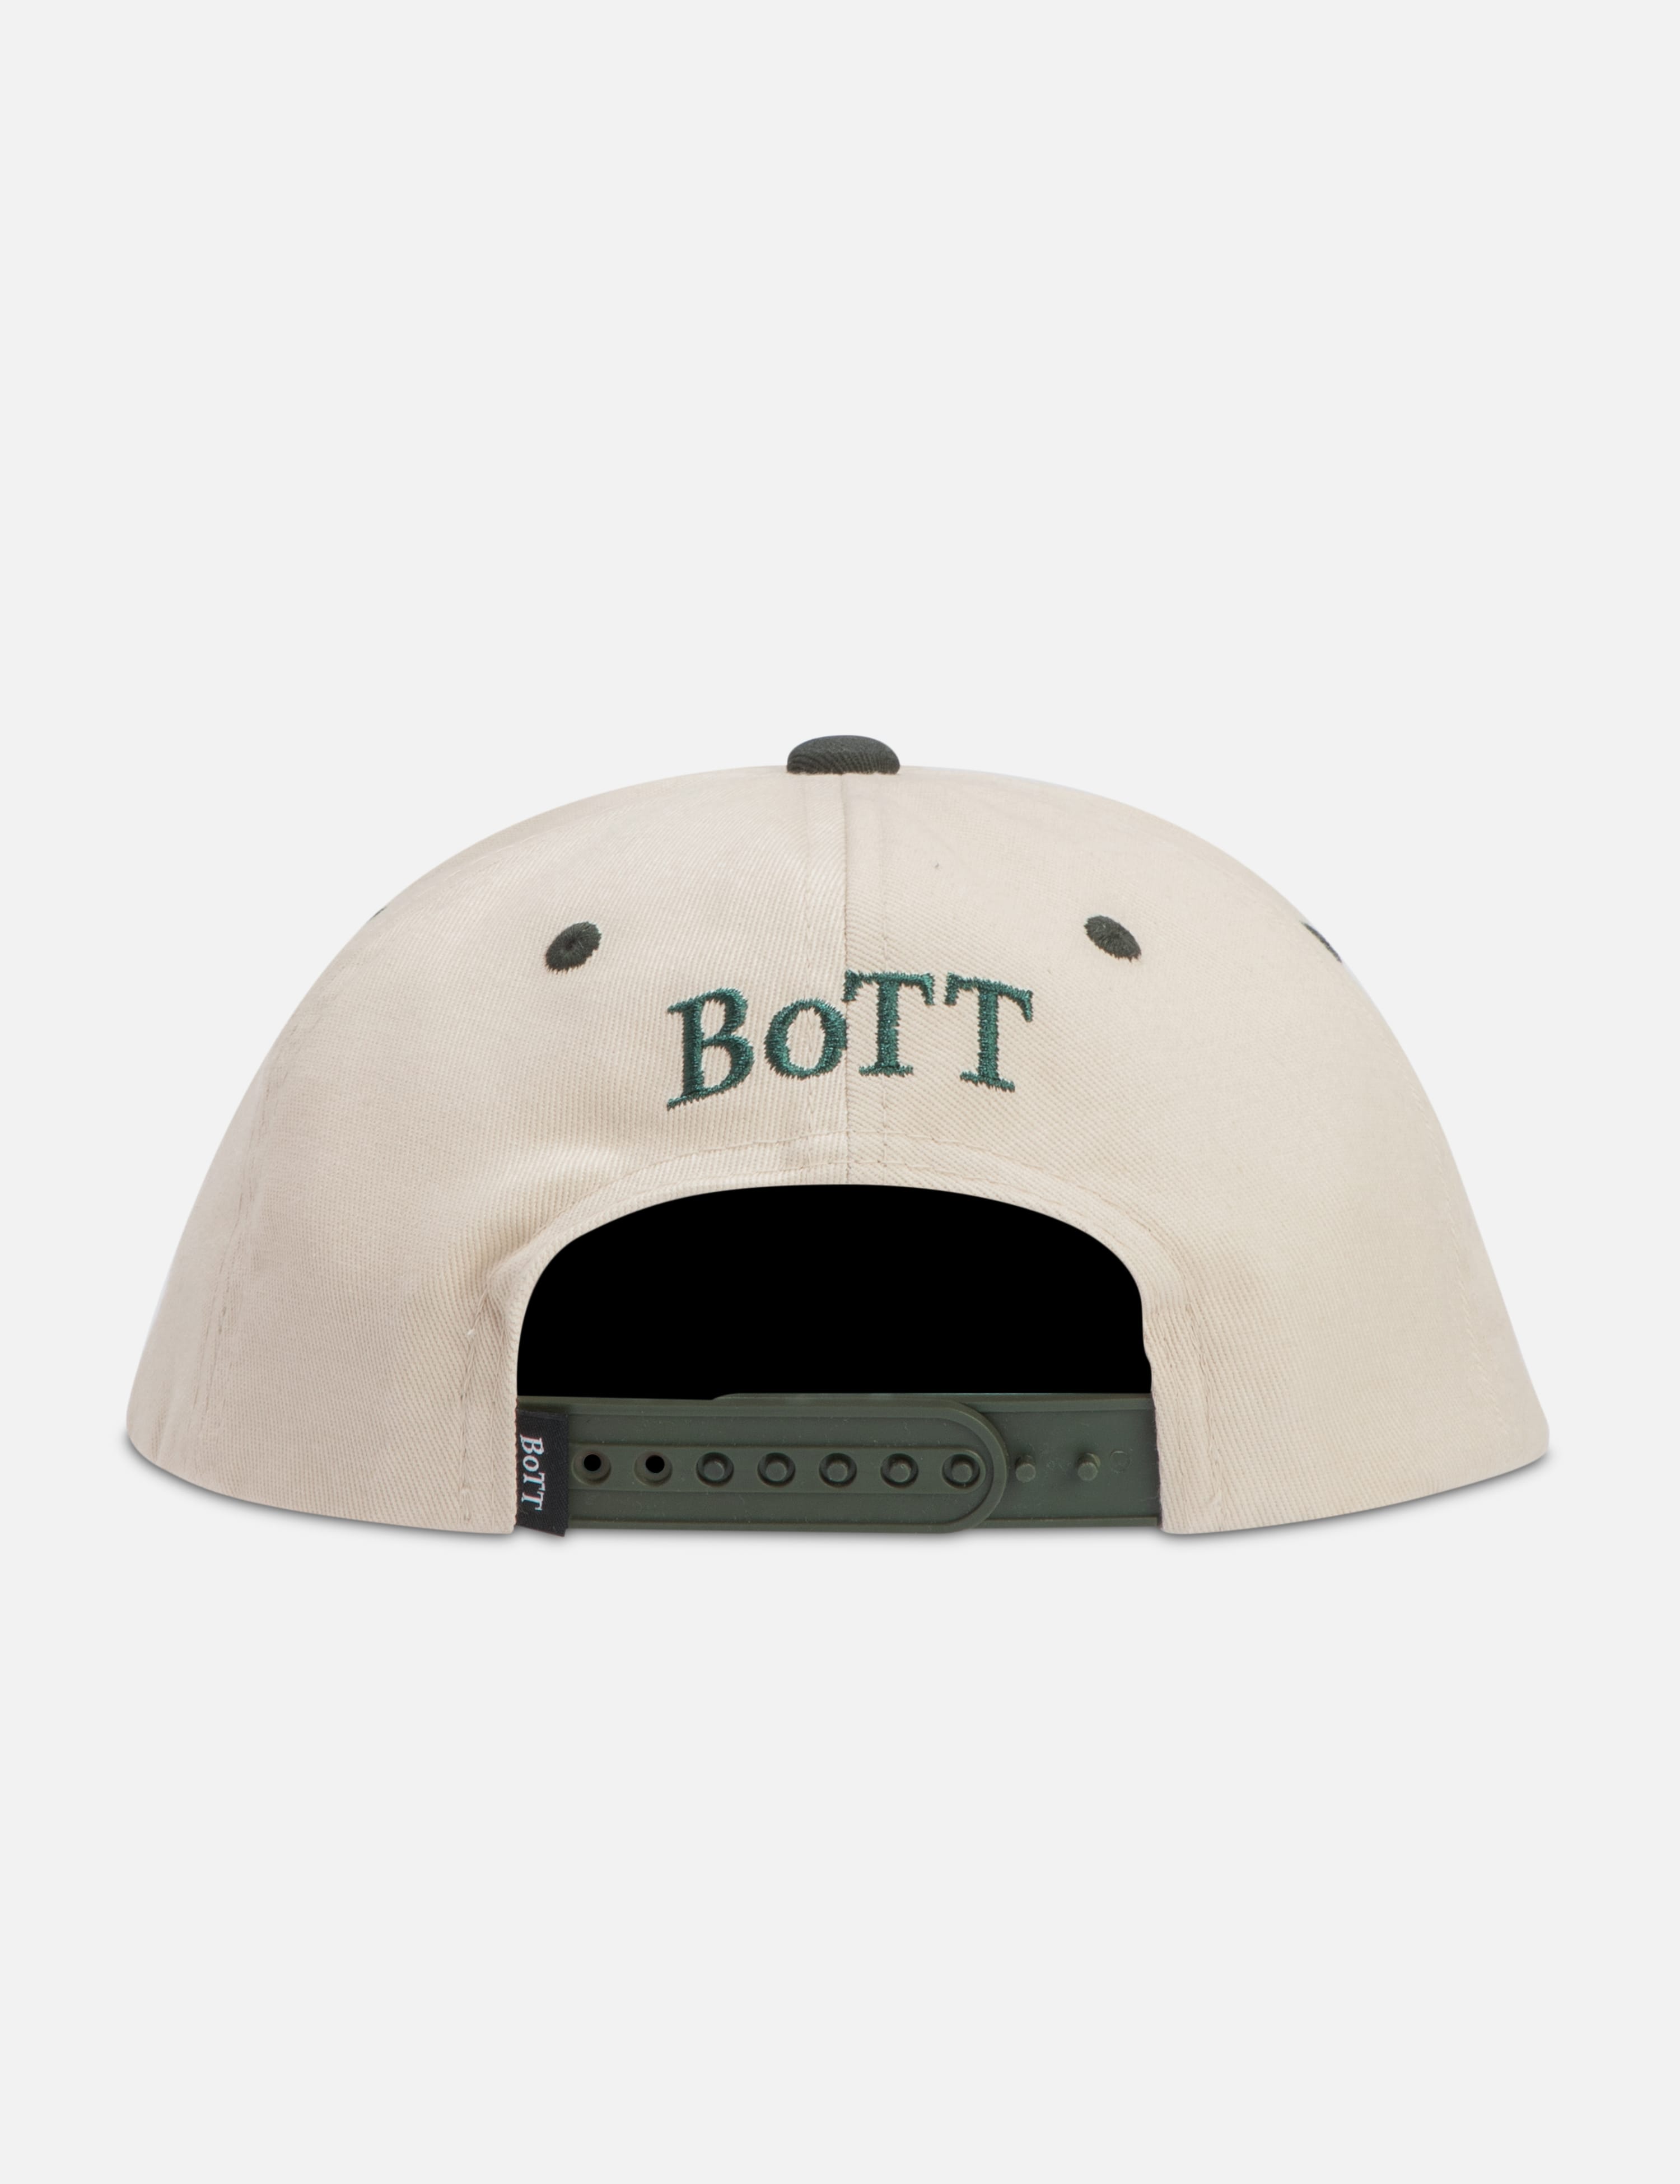 BoTT - Light Logo 5 Panel Cap | HBX - Globally Curated Fashion and